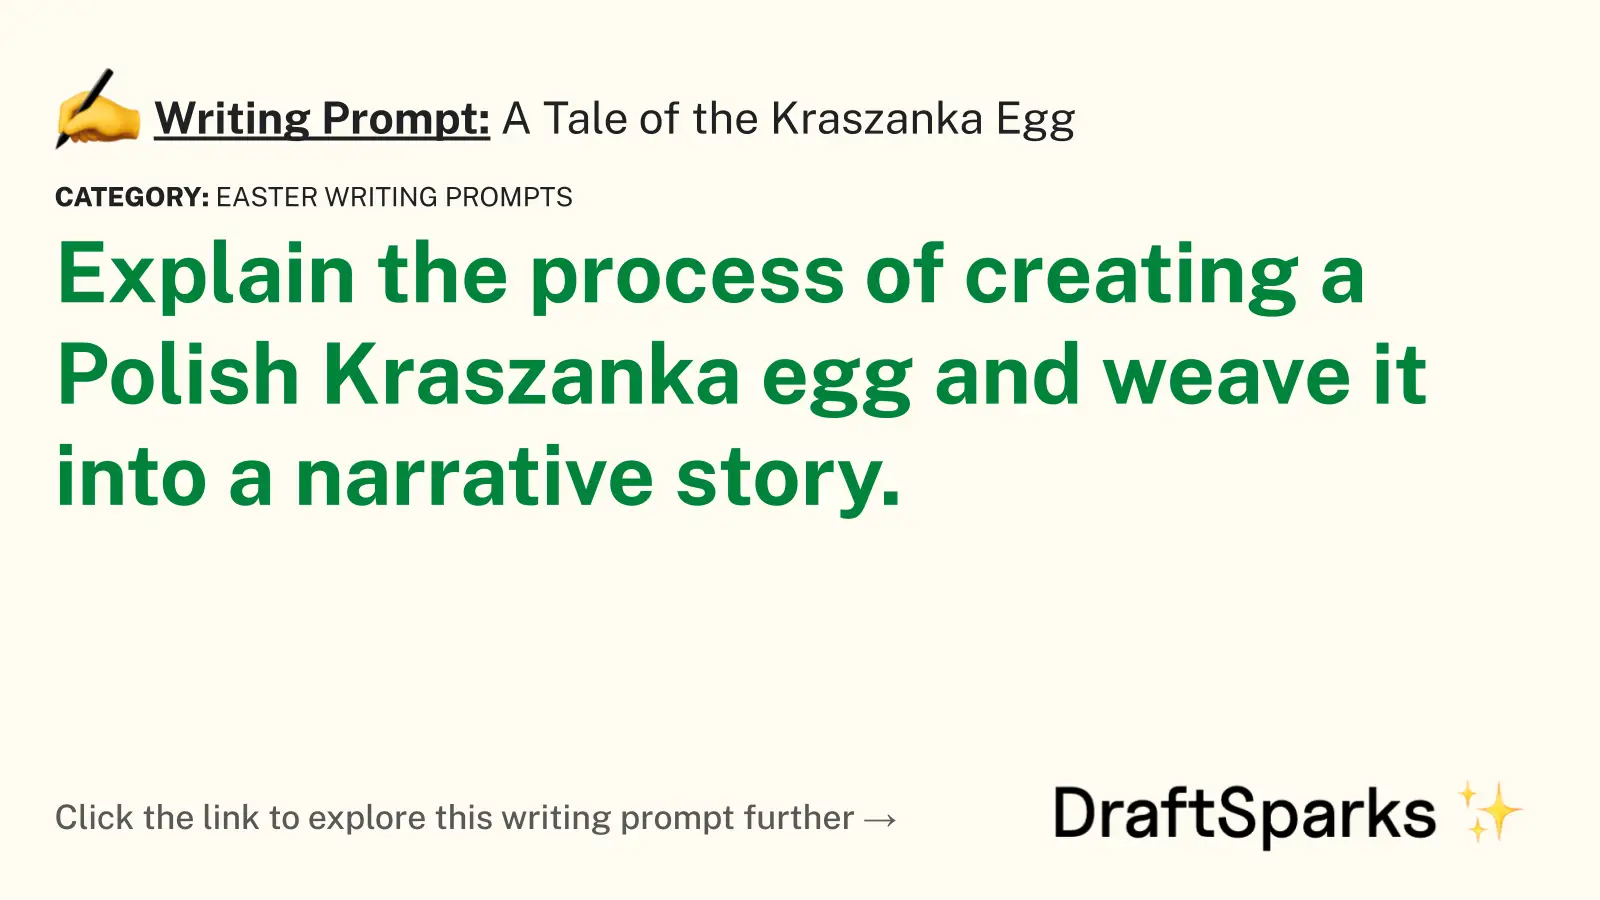 A Tale of the Kraszanka Egg